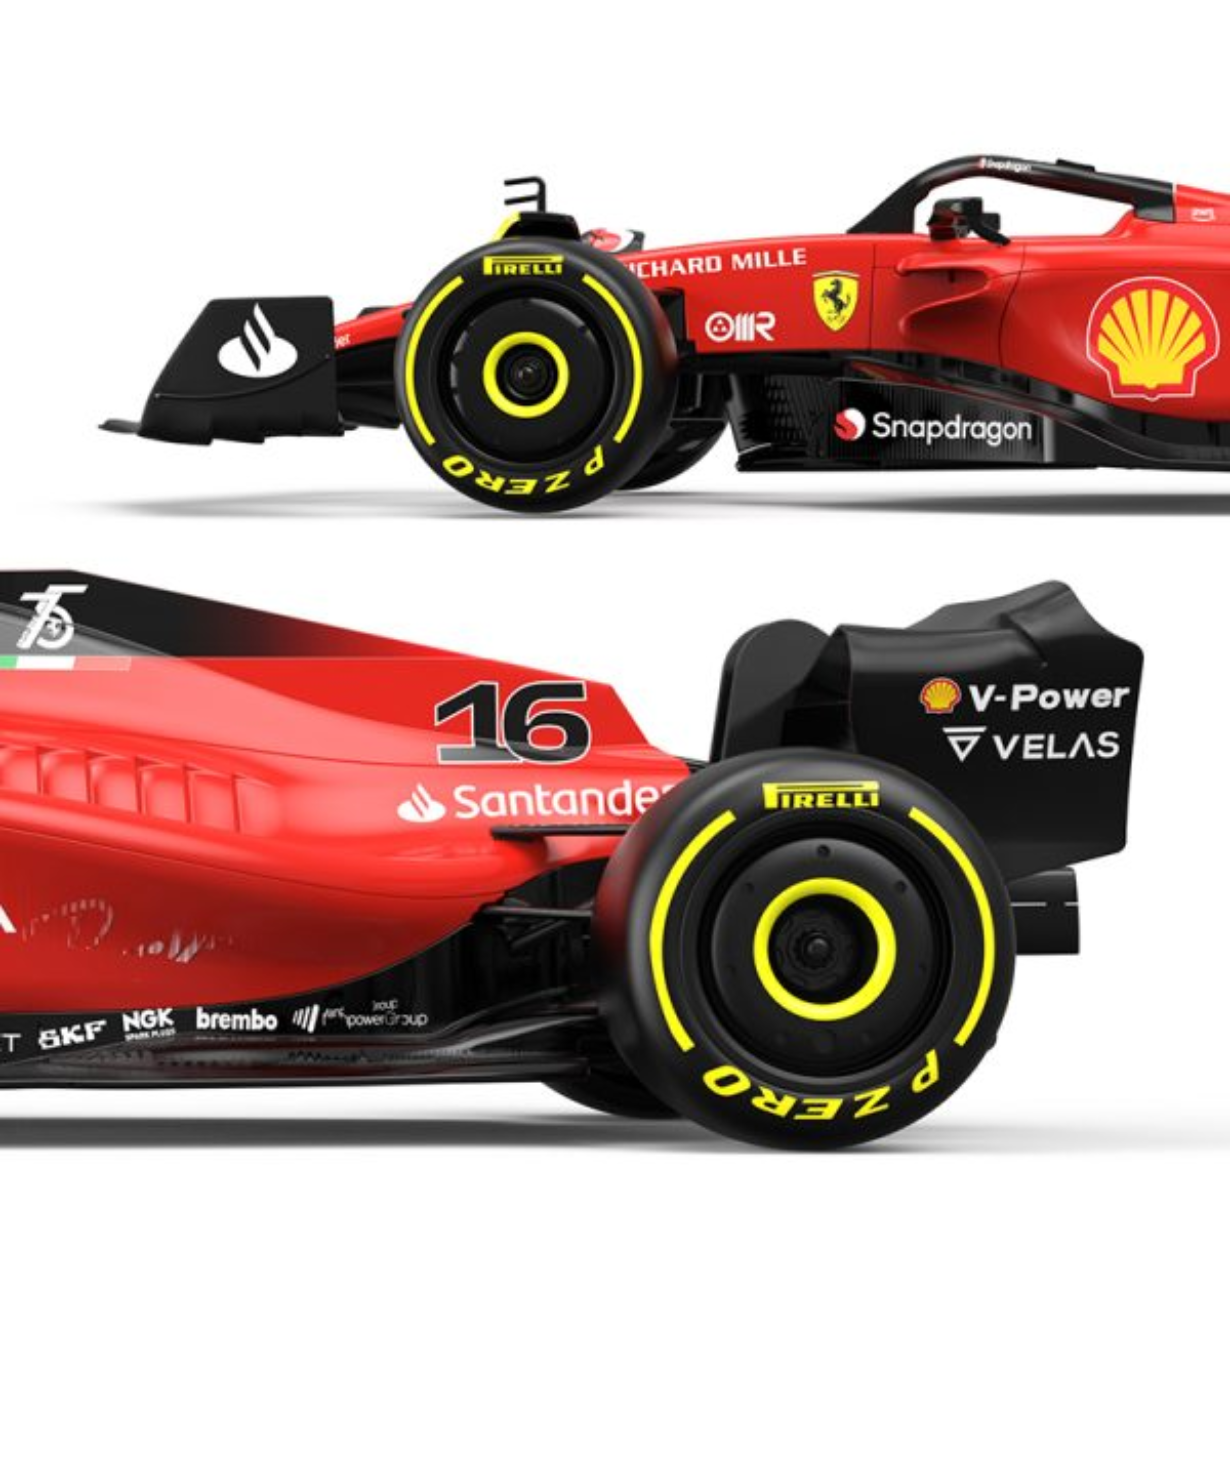 Rastar Ferrari F1 Car r/c